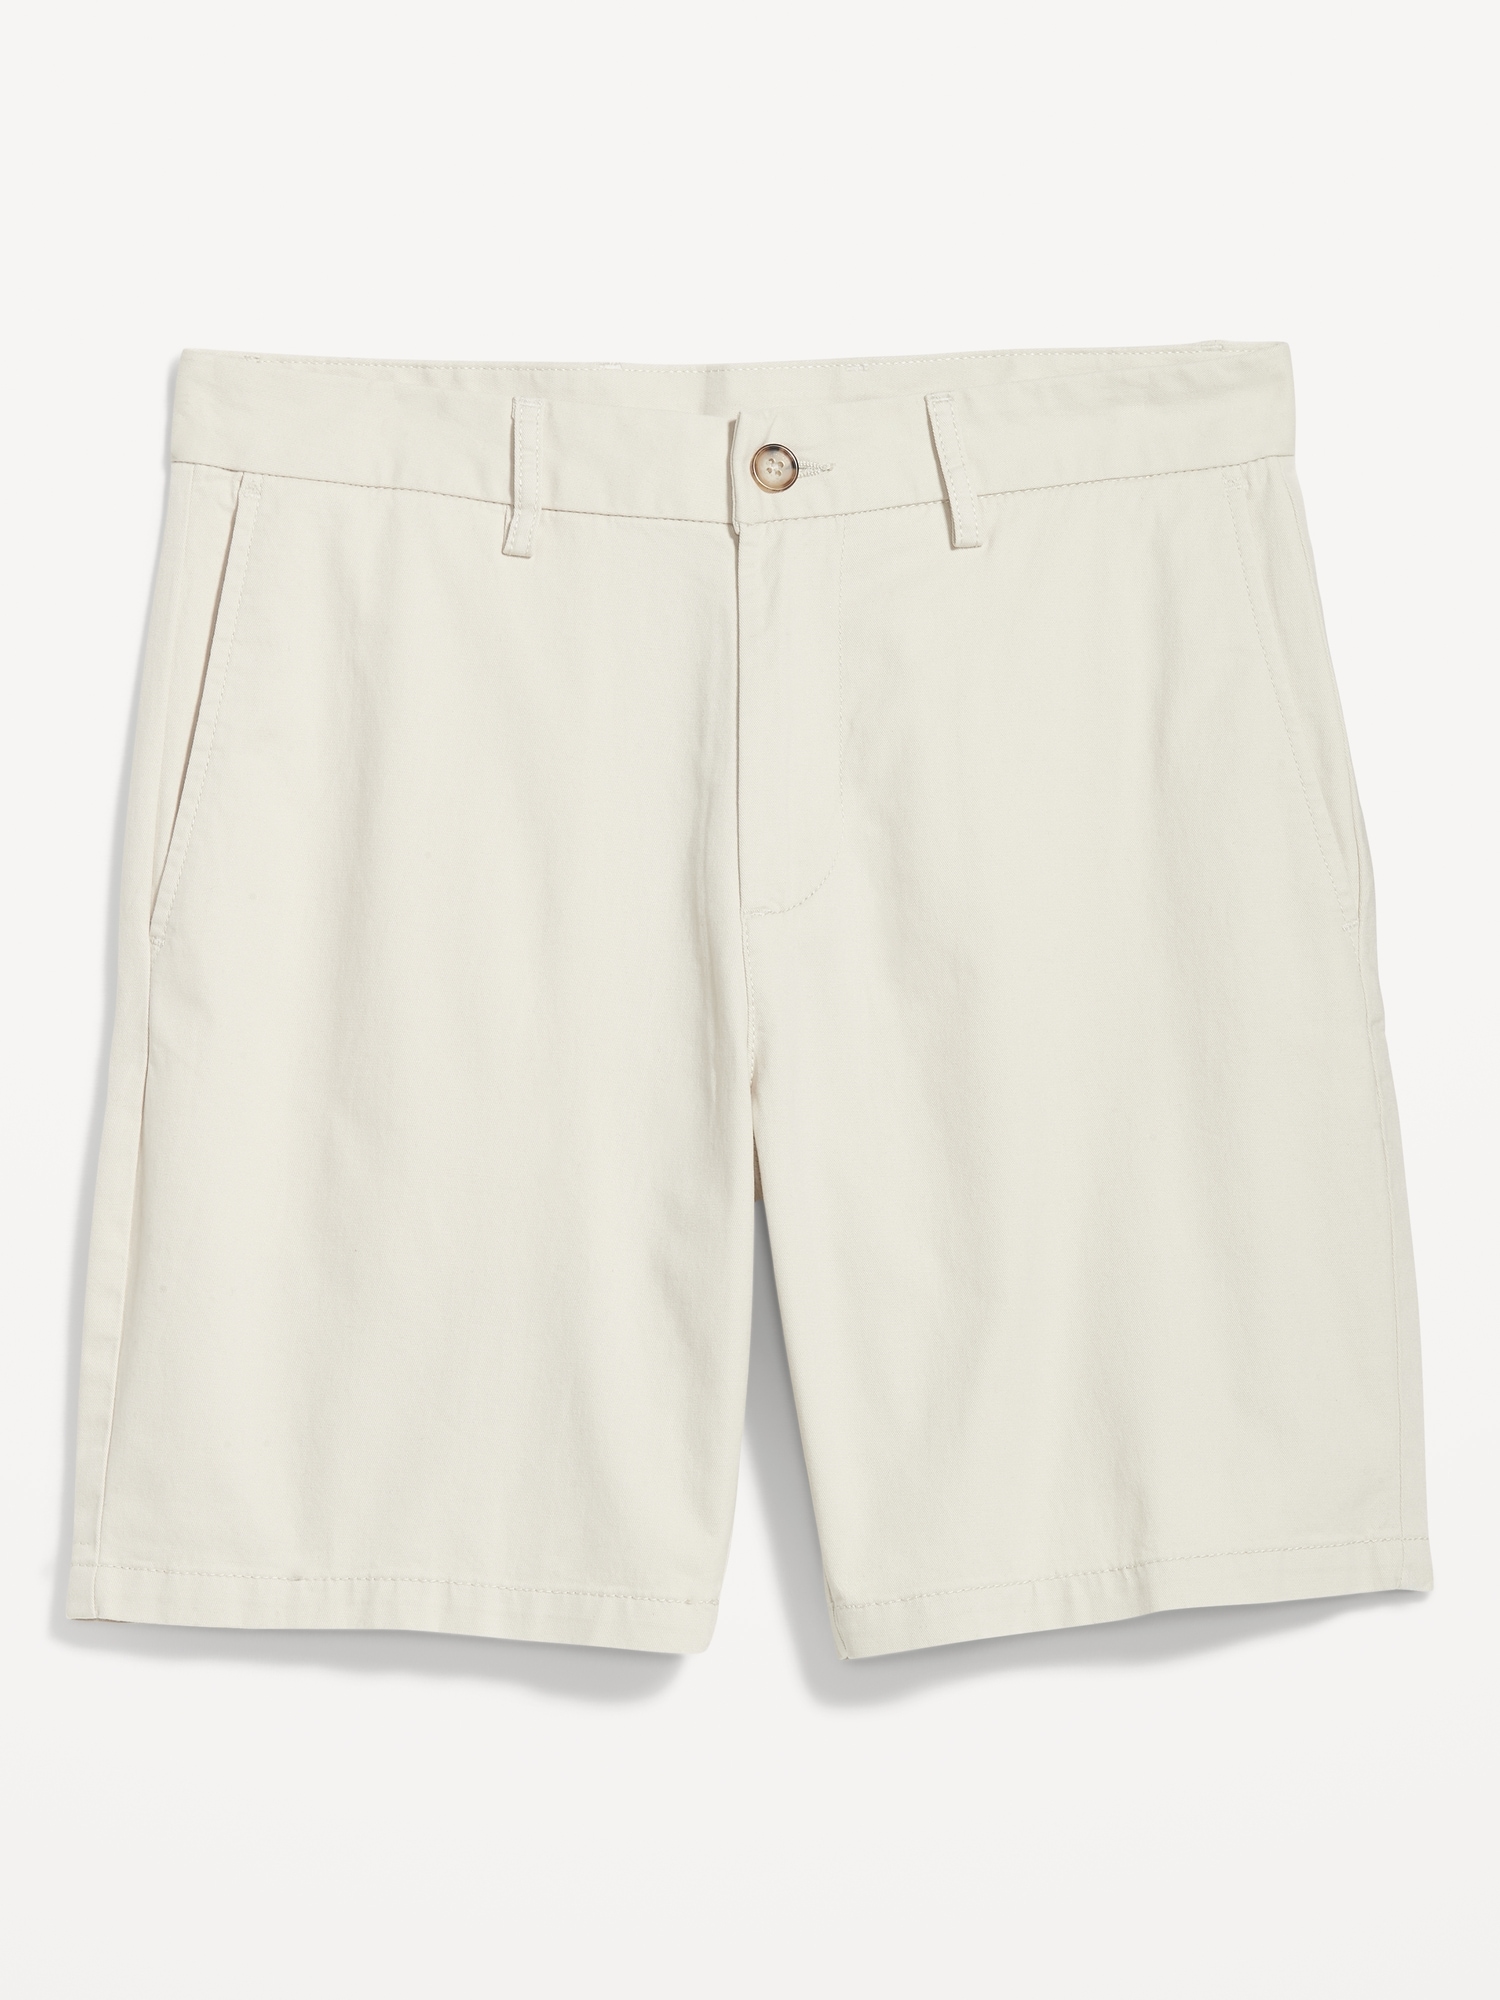 Slim Built-In Flex Rotation Chino Shorts -- 8-inch inseam